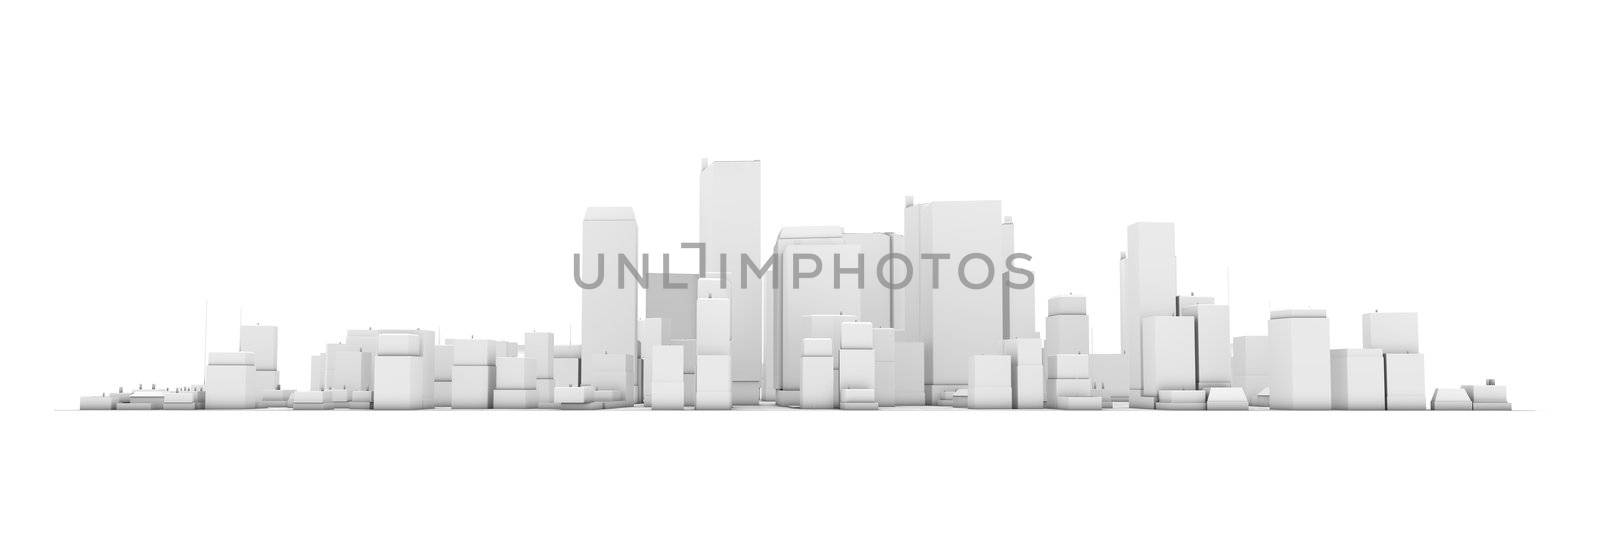 Wide Cityscape Model 3D - White City White Background by PixBox